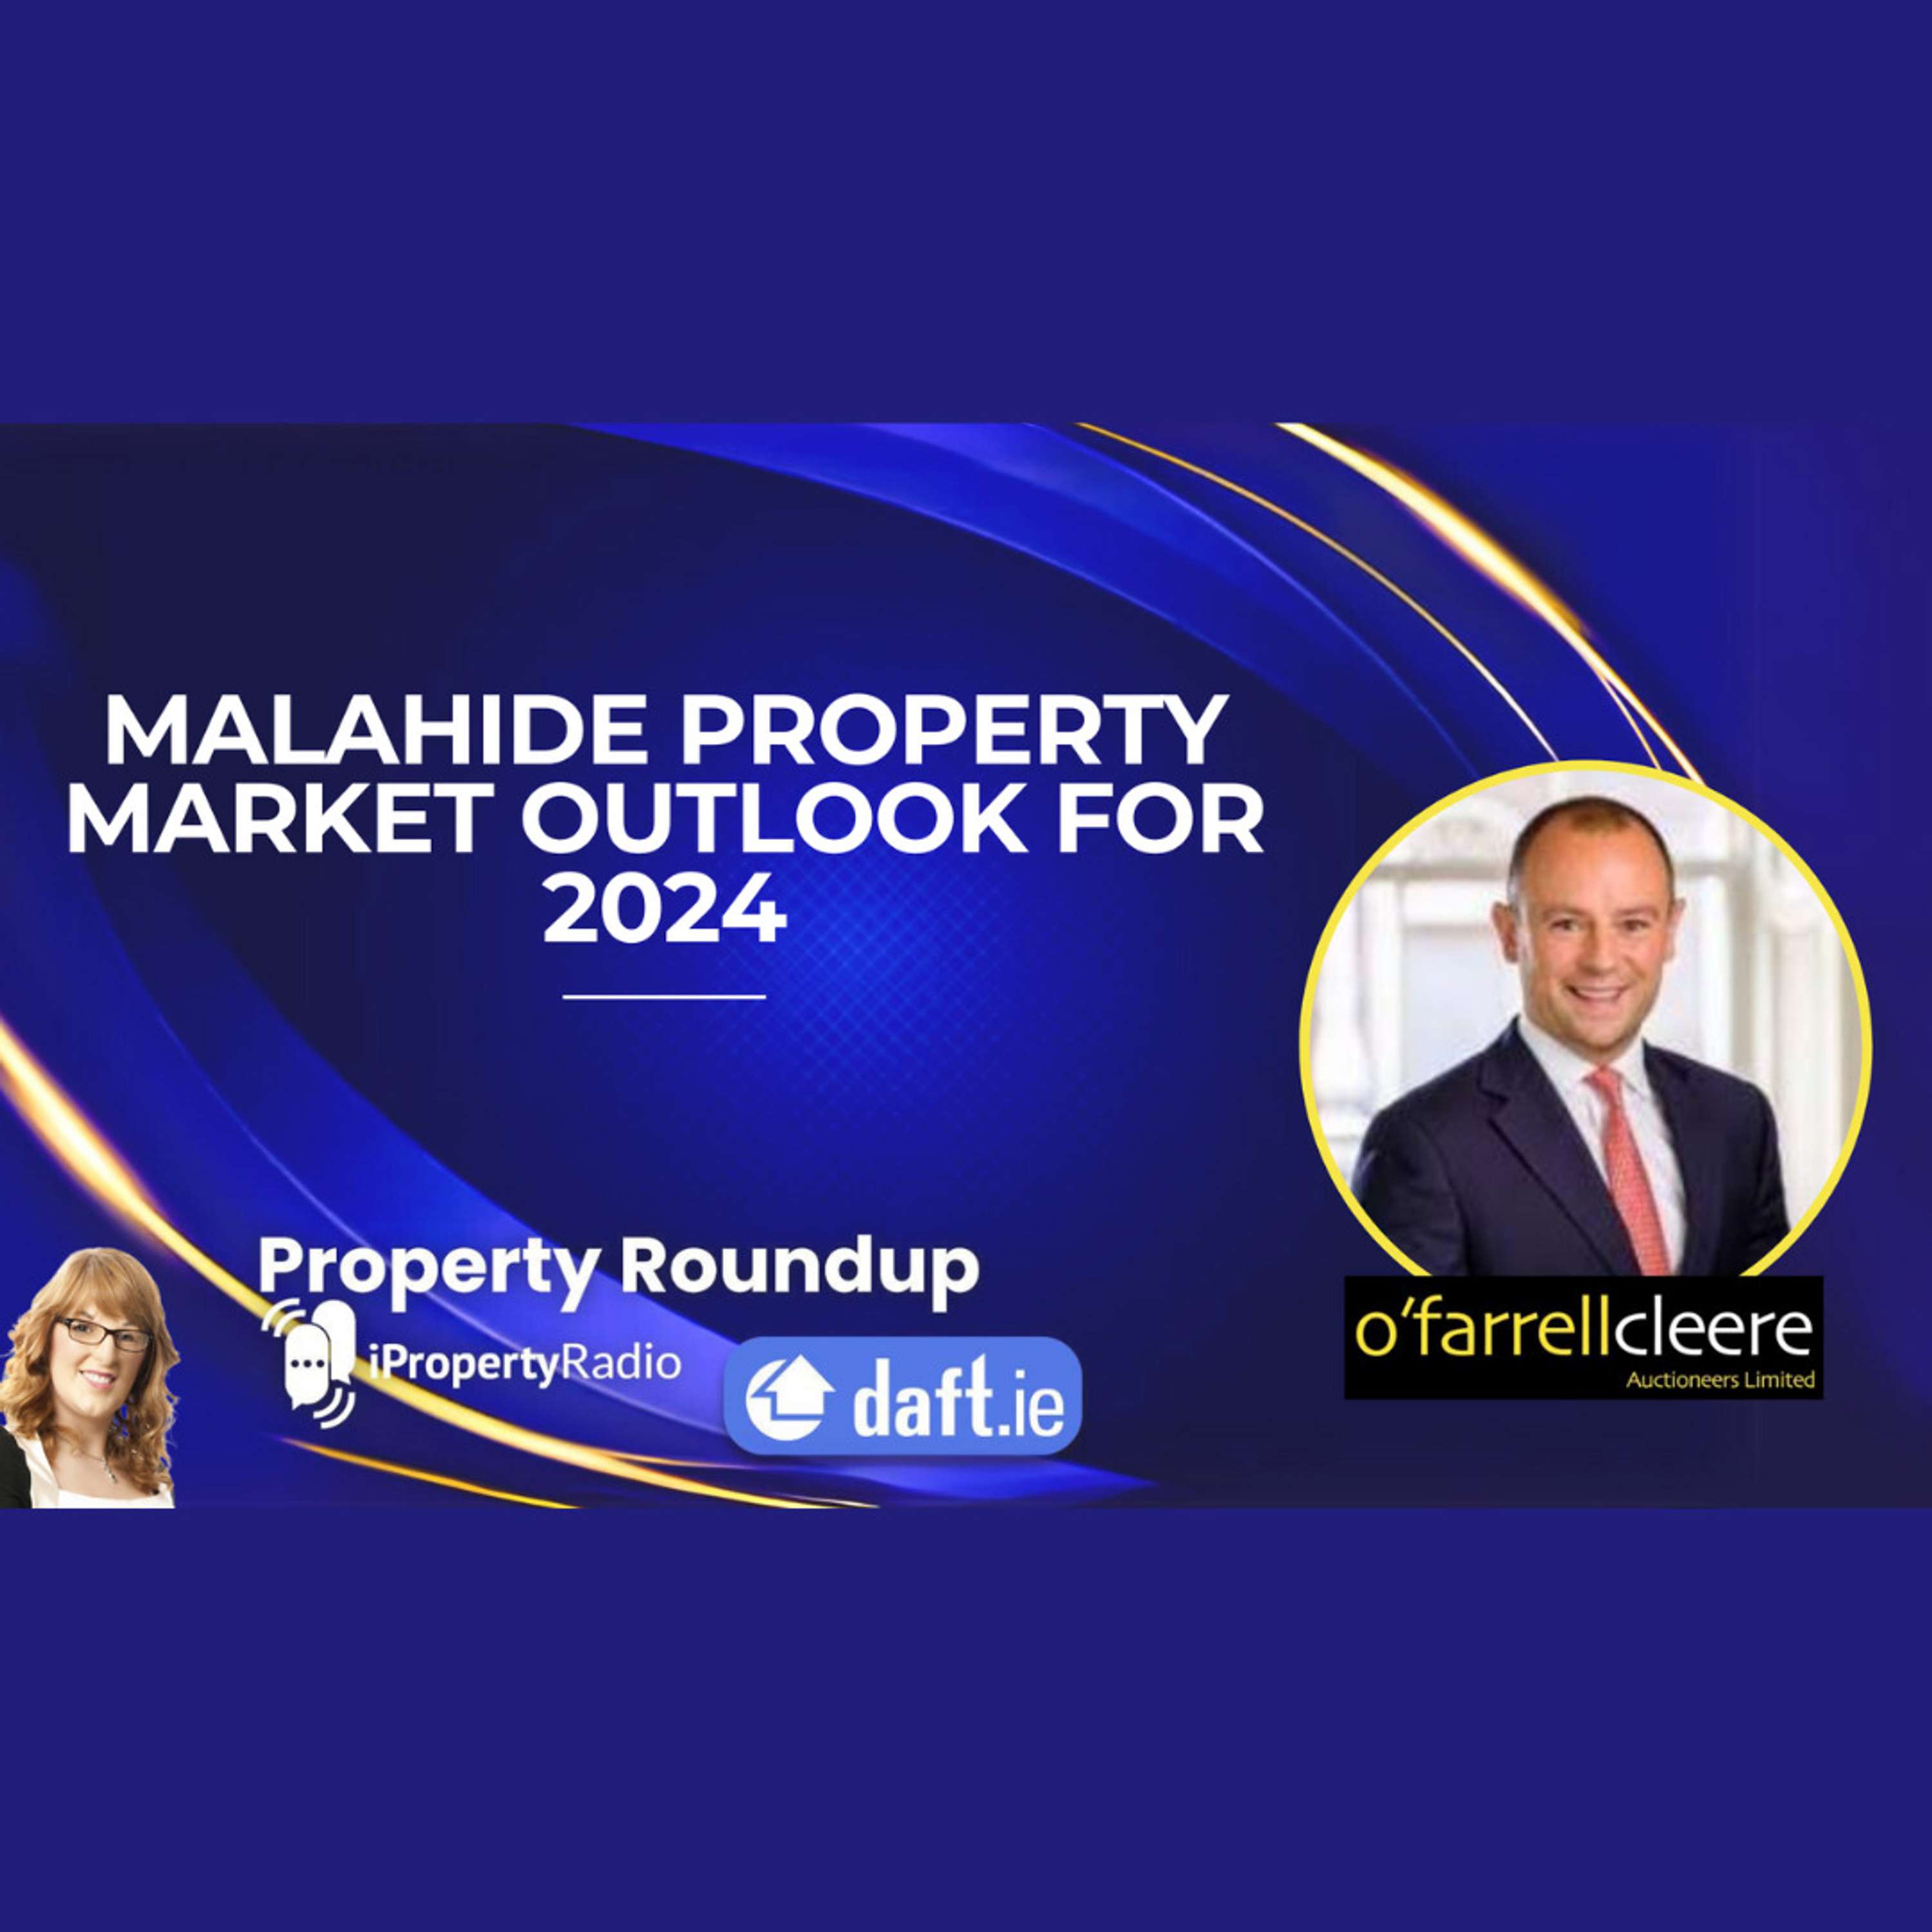 Malahide Property Market Outlook for 2024